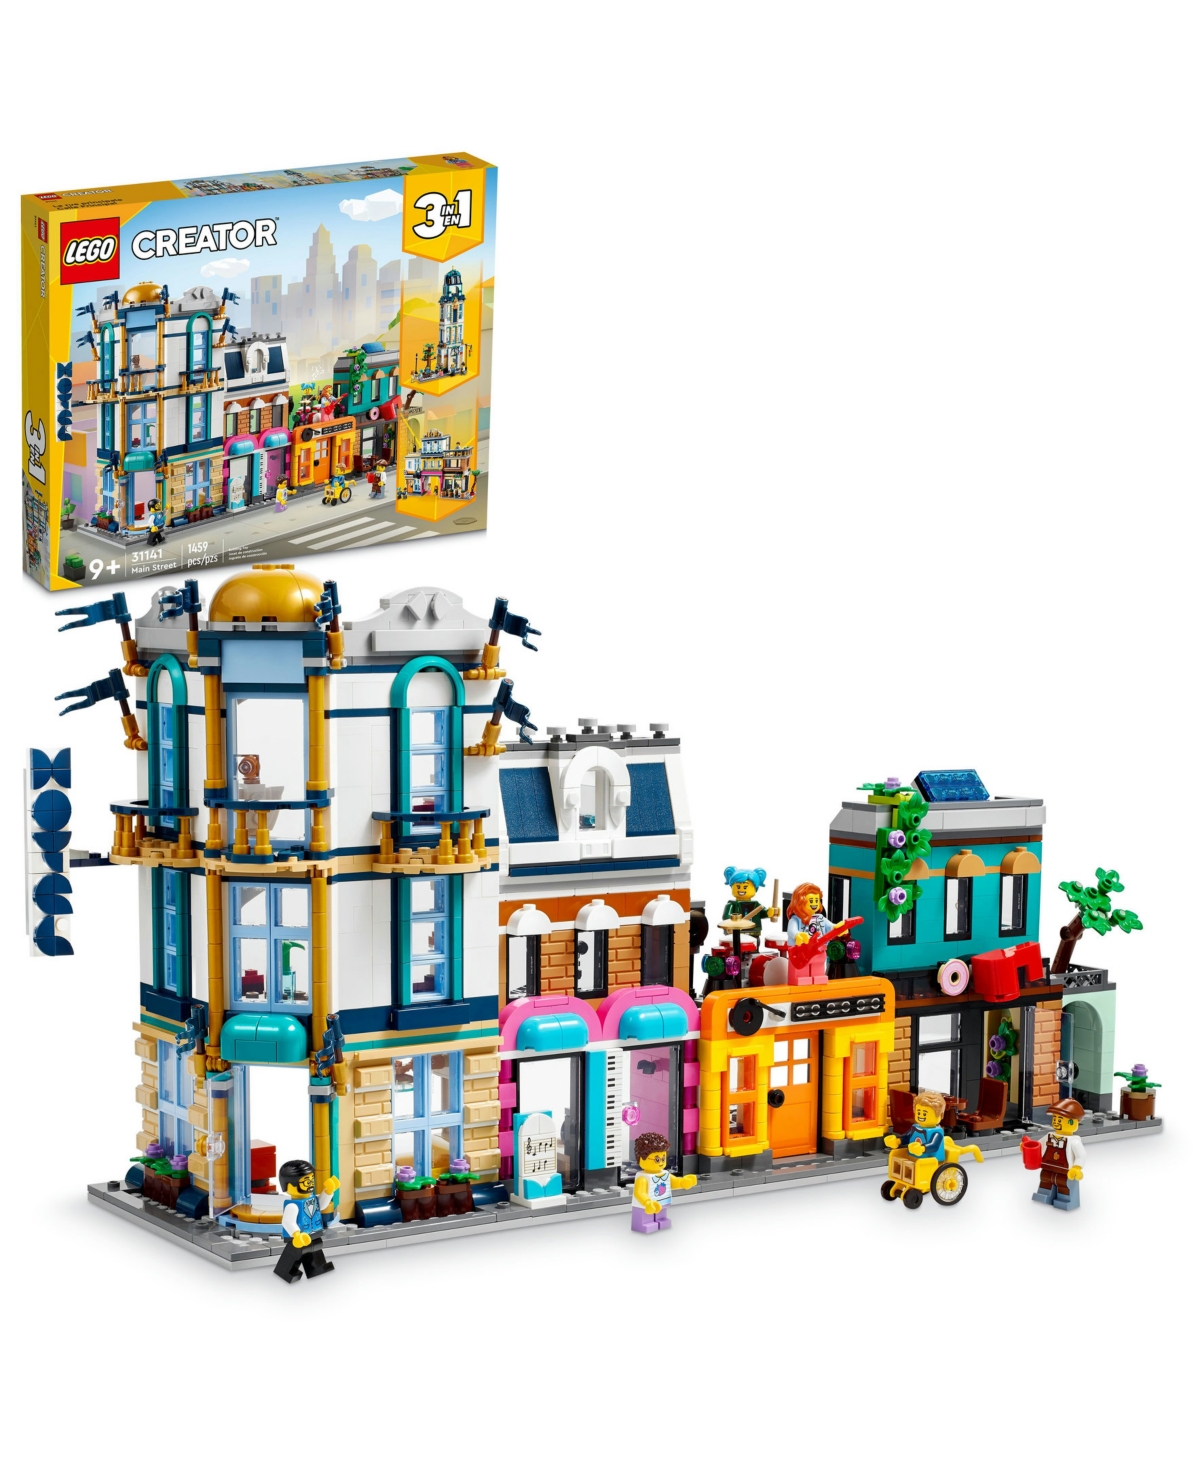 Lego Creator 31141 Main Street Toy Minifigure Building Set In Multicolor